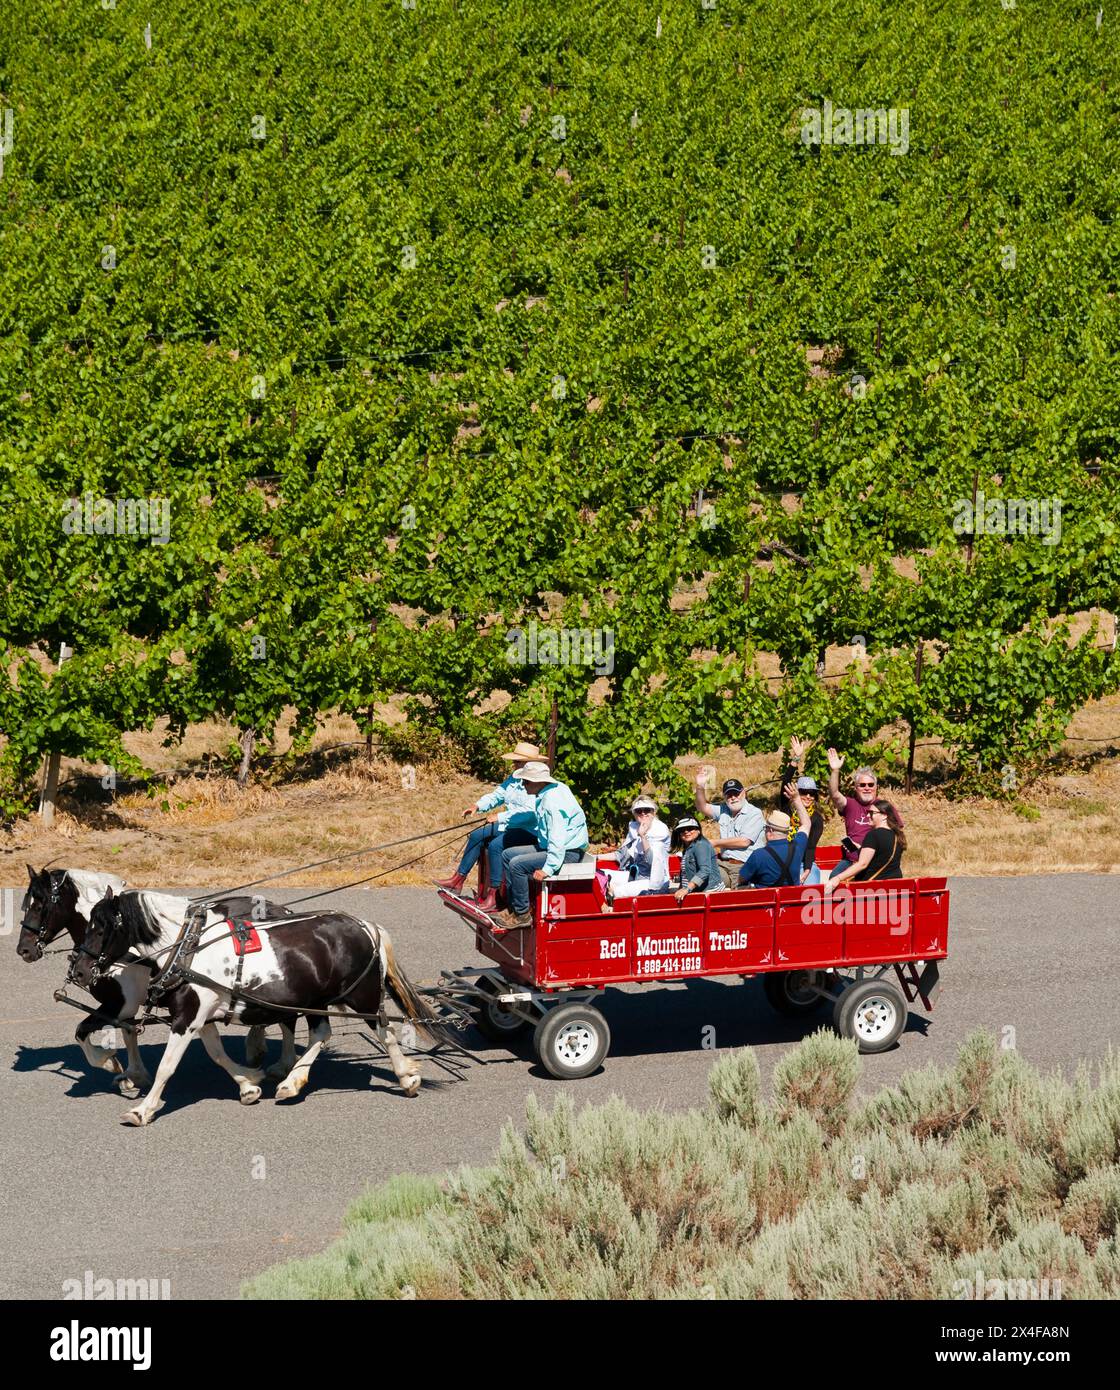 USA, Washington State, Red Mountain. Wagon ride through the vineyards of Red Mountain. (Editorial Use Only) Stock Photo